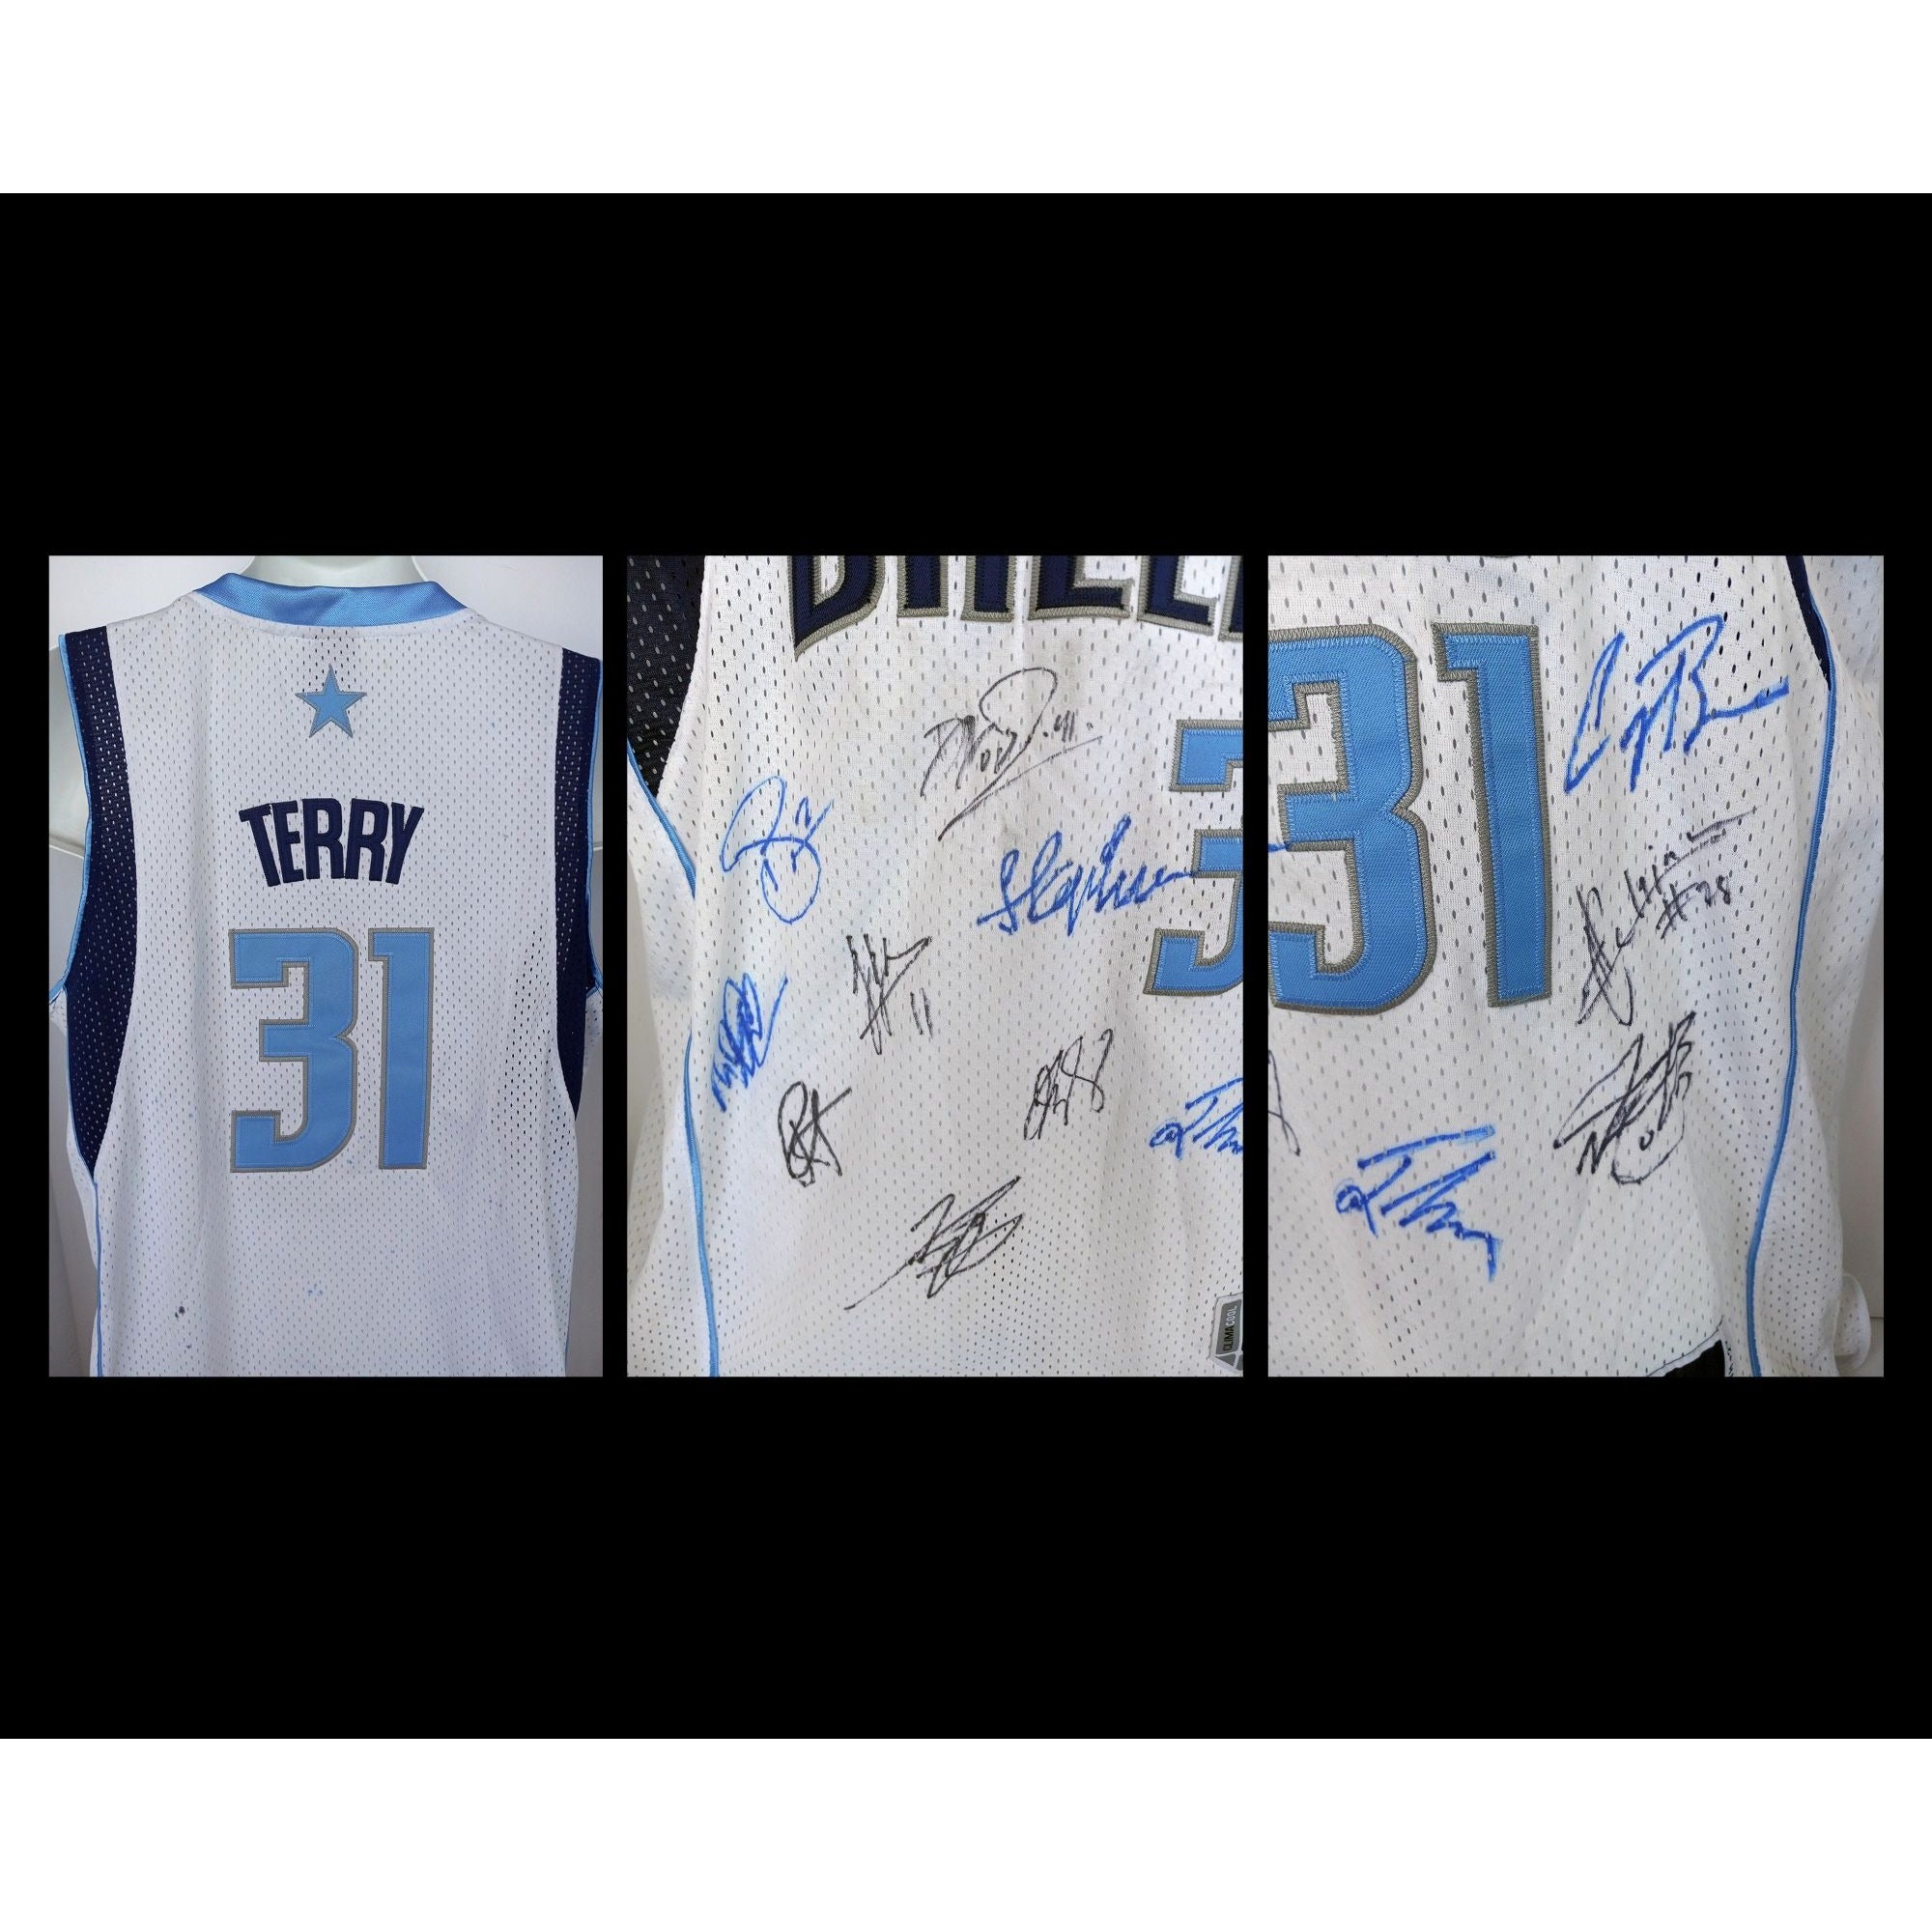 Dallas Mavericks, Dirk Nowitzki NBA champs team signed jersey